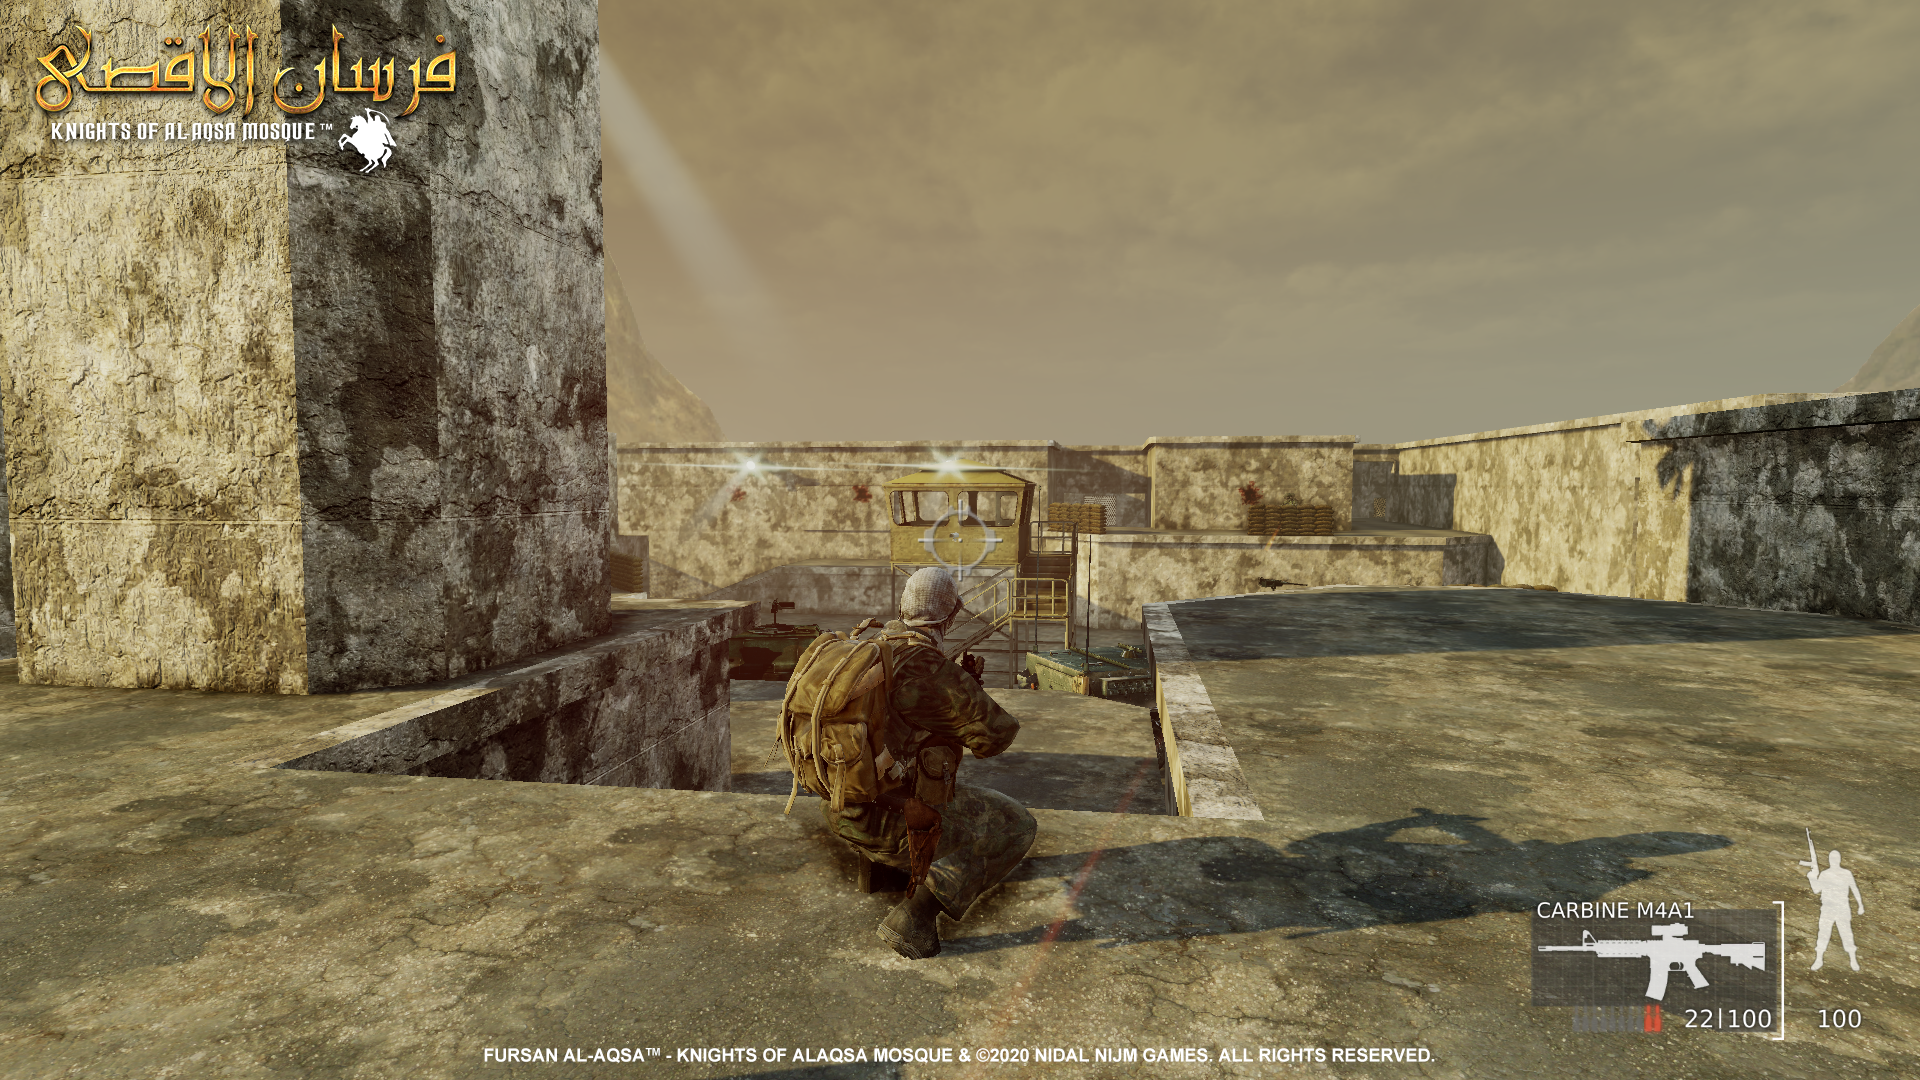 Fursan alAqsa  Showcase Camp Ariel Sharo 5 - I am developing a game about Palestine Resistance